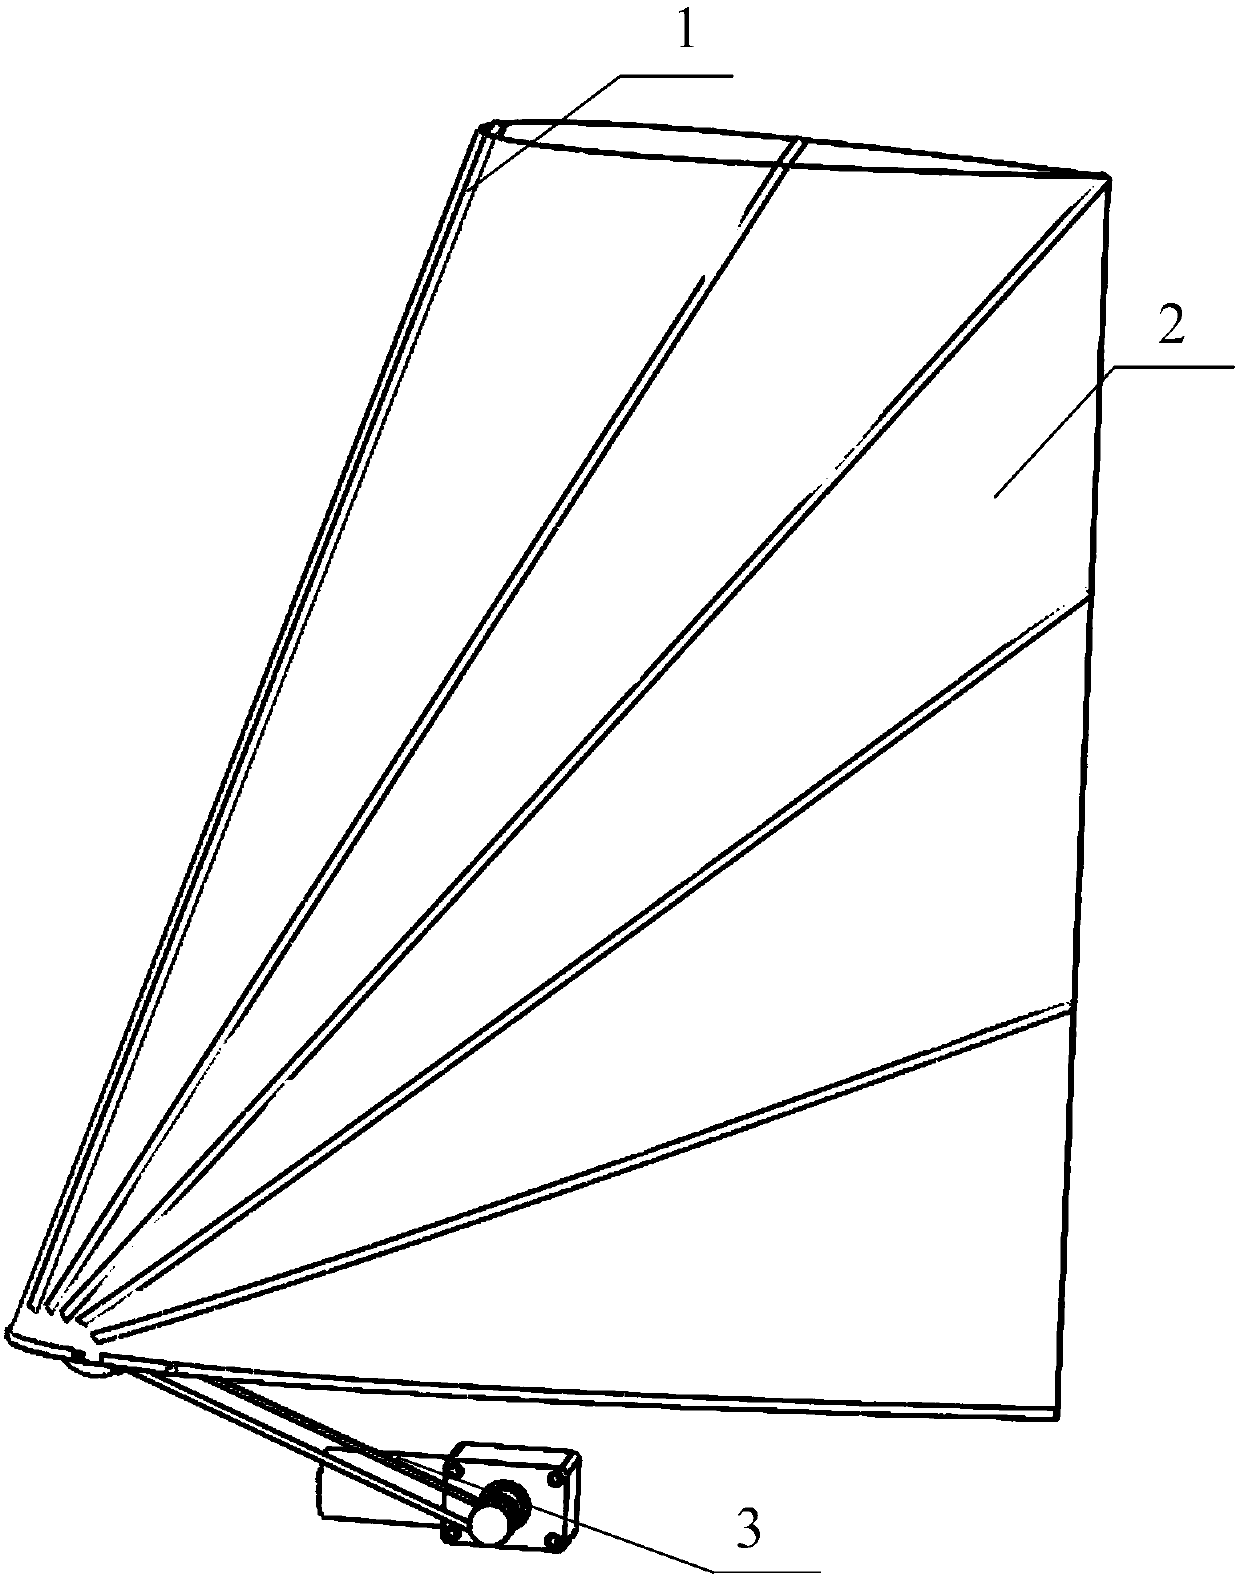 Single-degree-of-freedom foldable sail